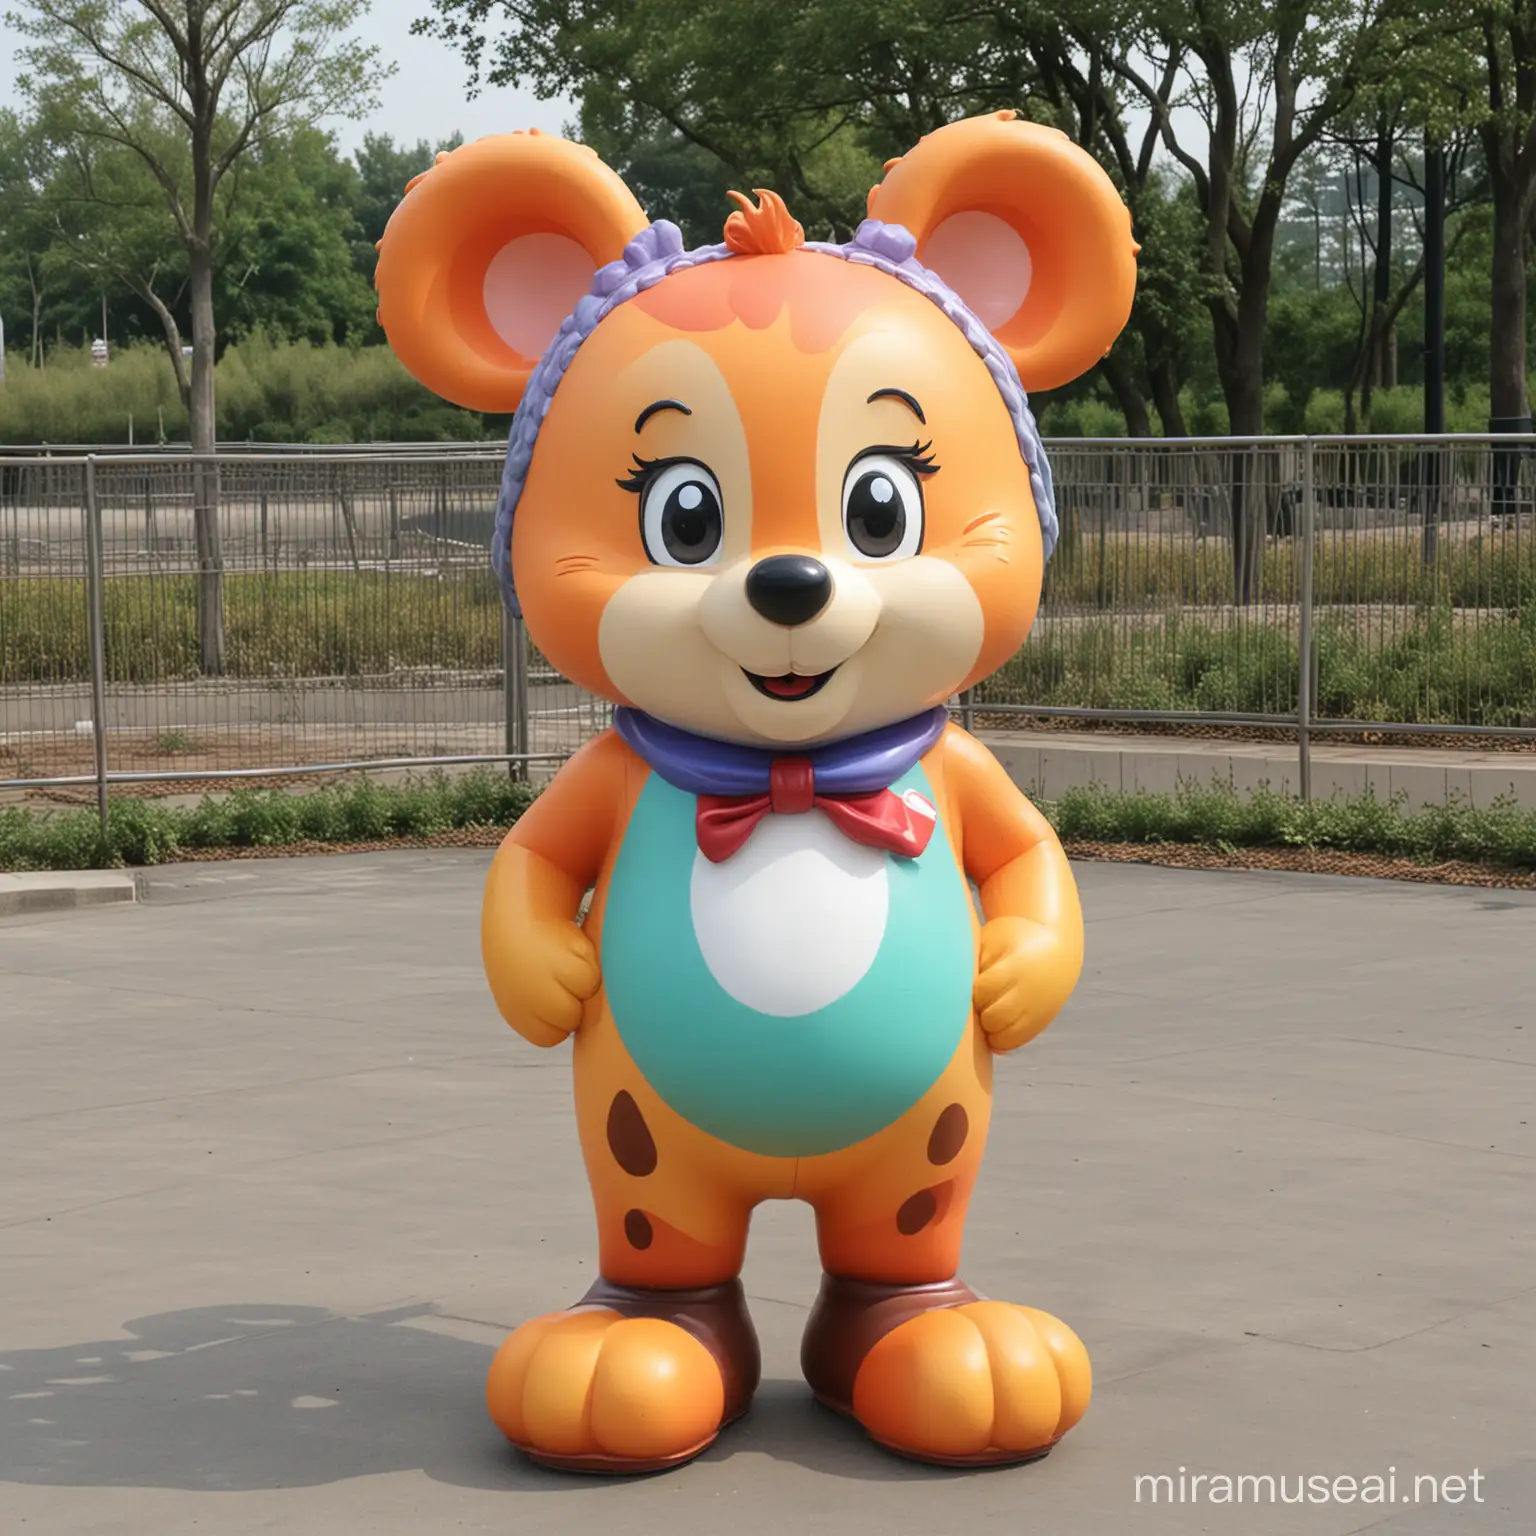 Colorful Mascot Character at a Quaint Amusement Park